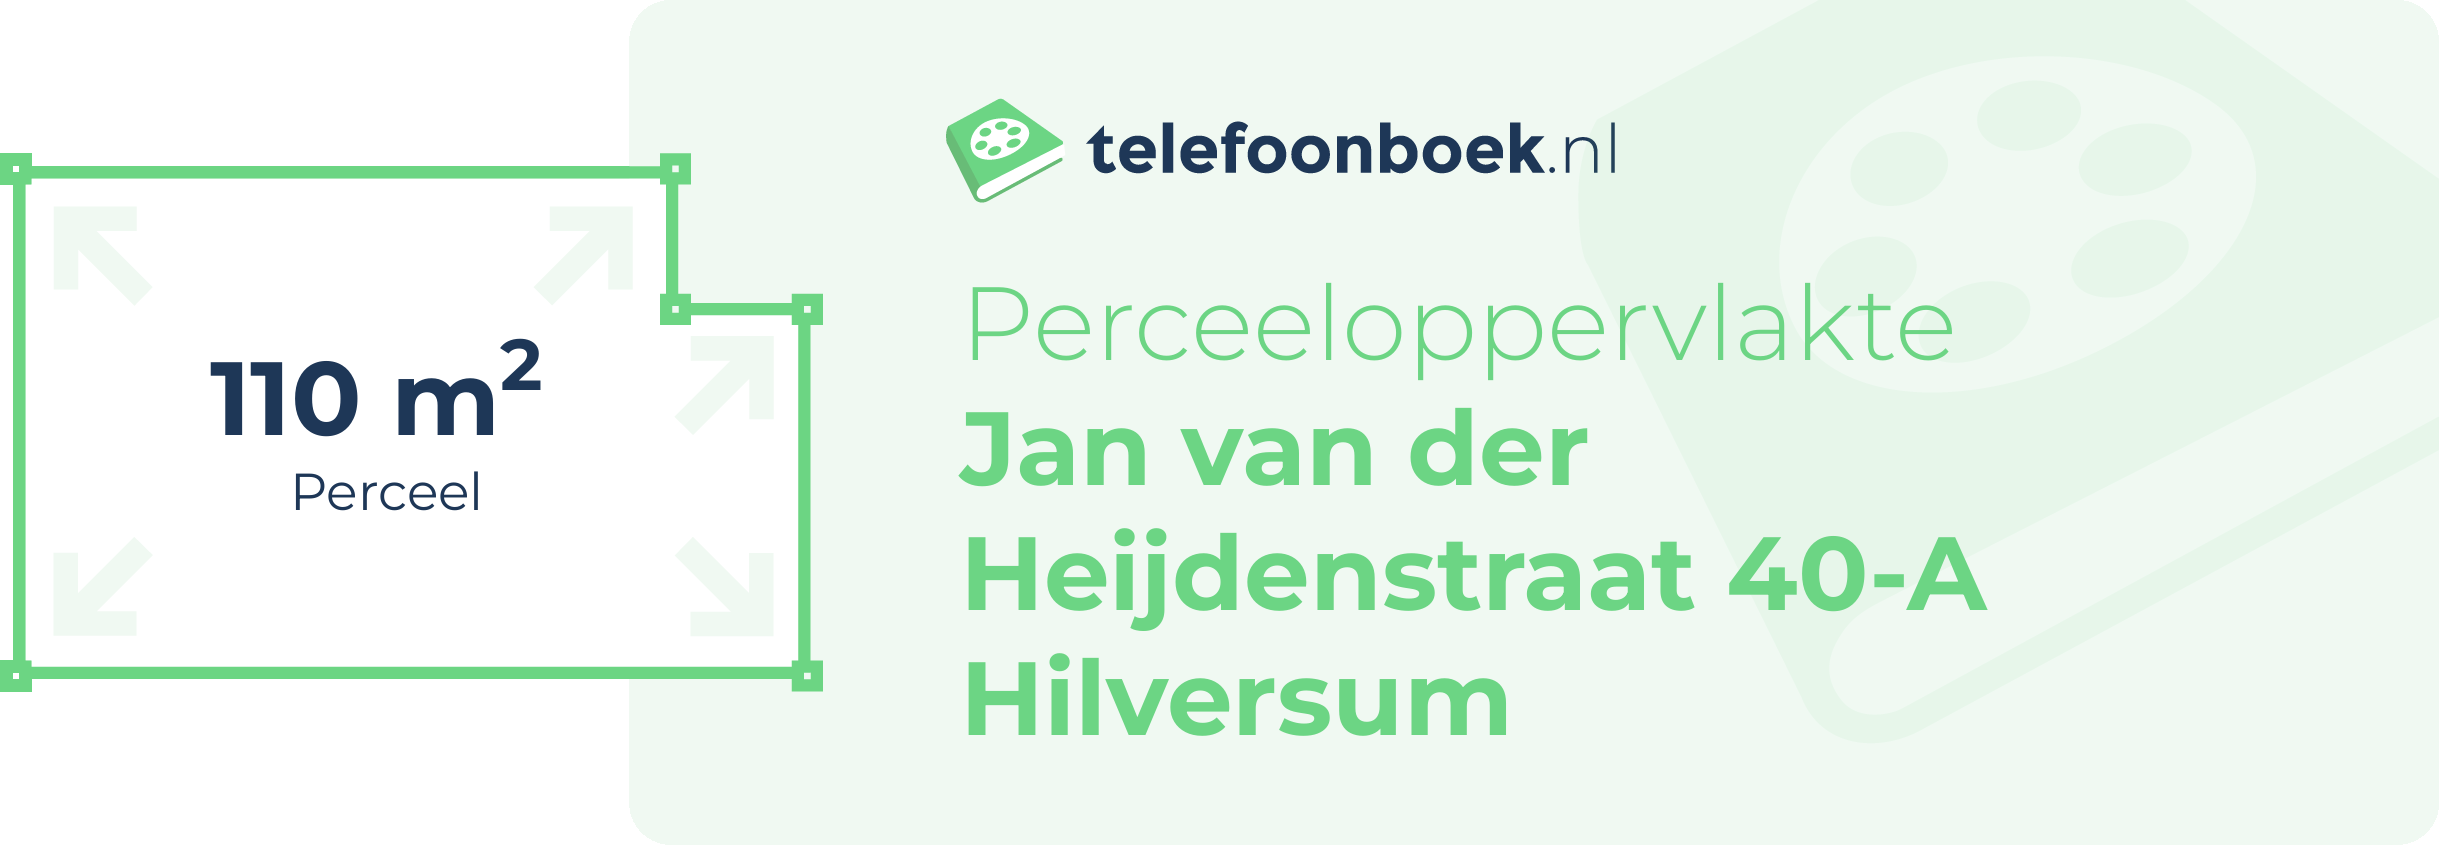 Perceeloppervlakte Jan Van Der Heijdenstraat 40-A Hilversum